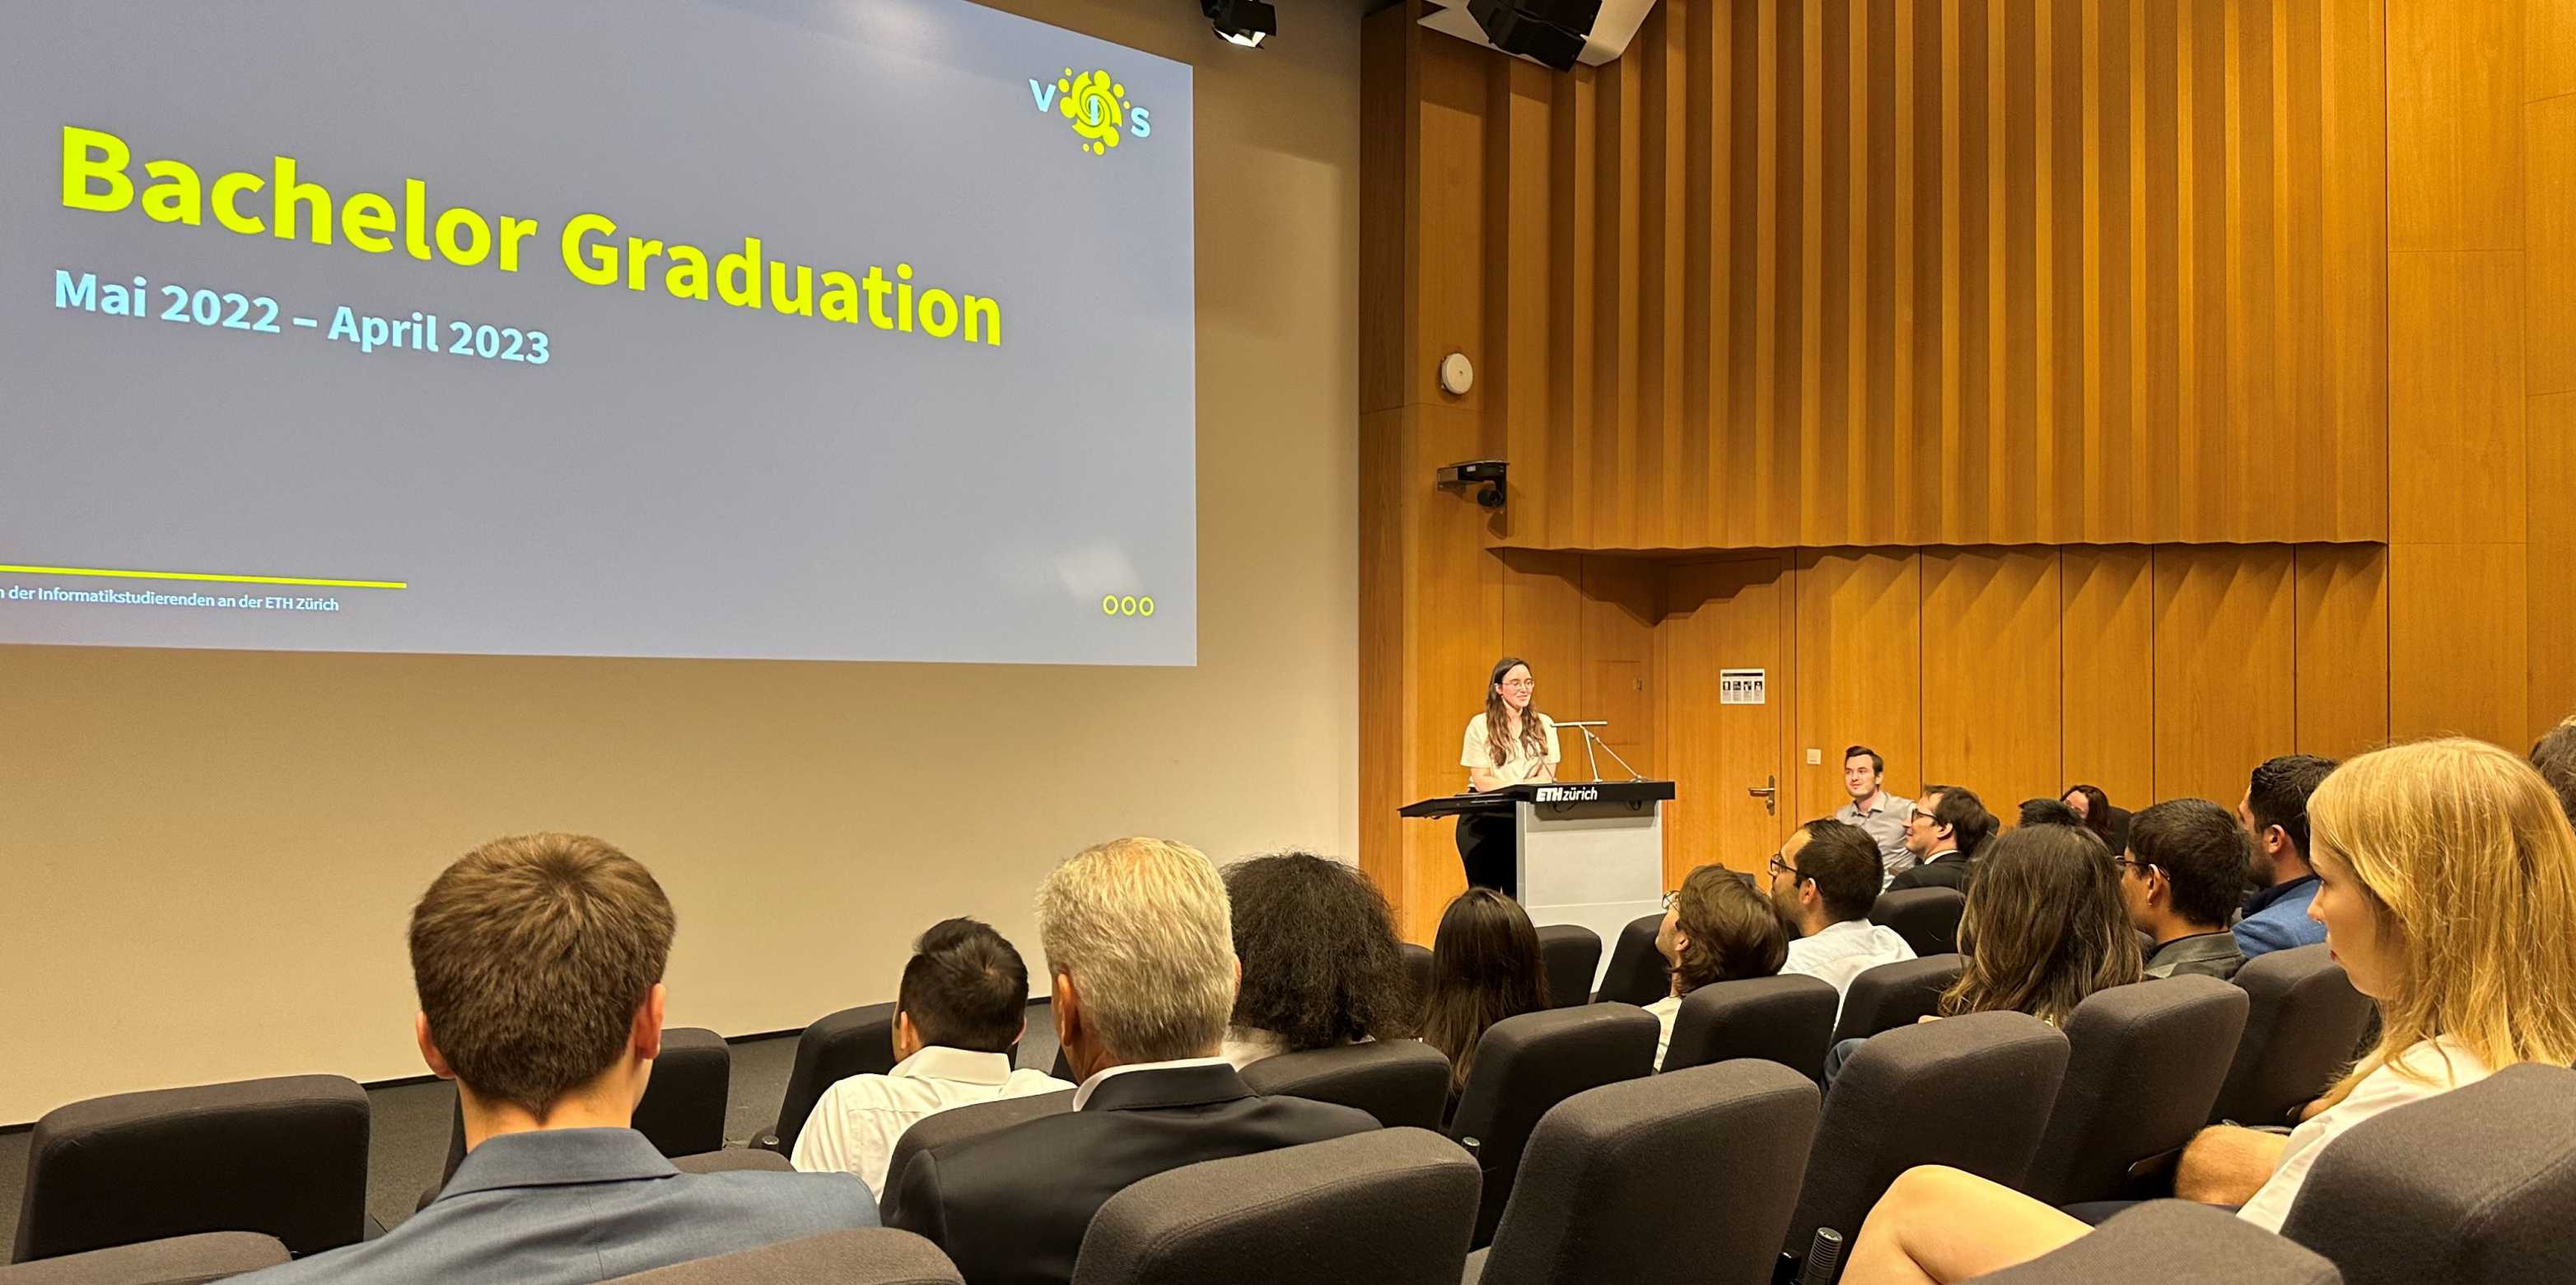 Julia Bogdan presenting a slide show "Bachelor graduation" in front of audience